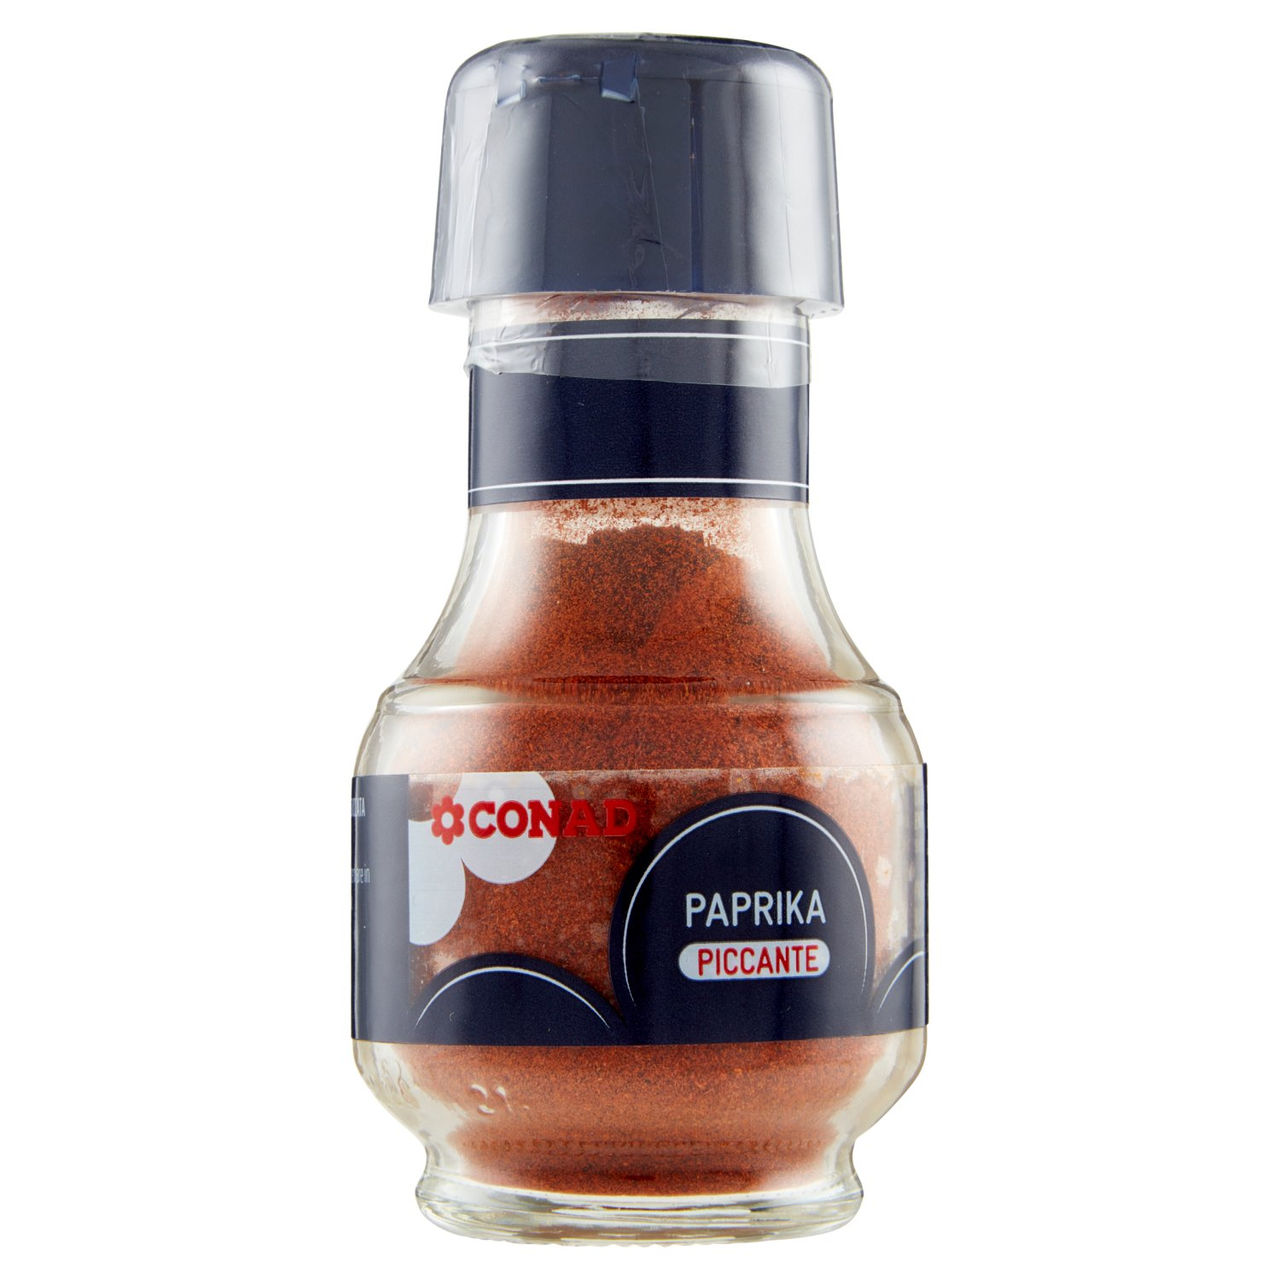 Paprika Piccante 40 g Conad in vendita online